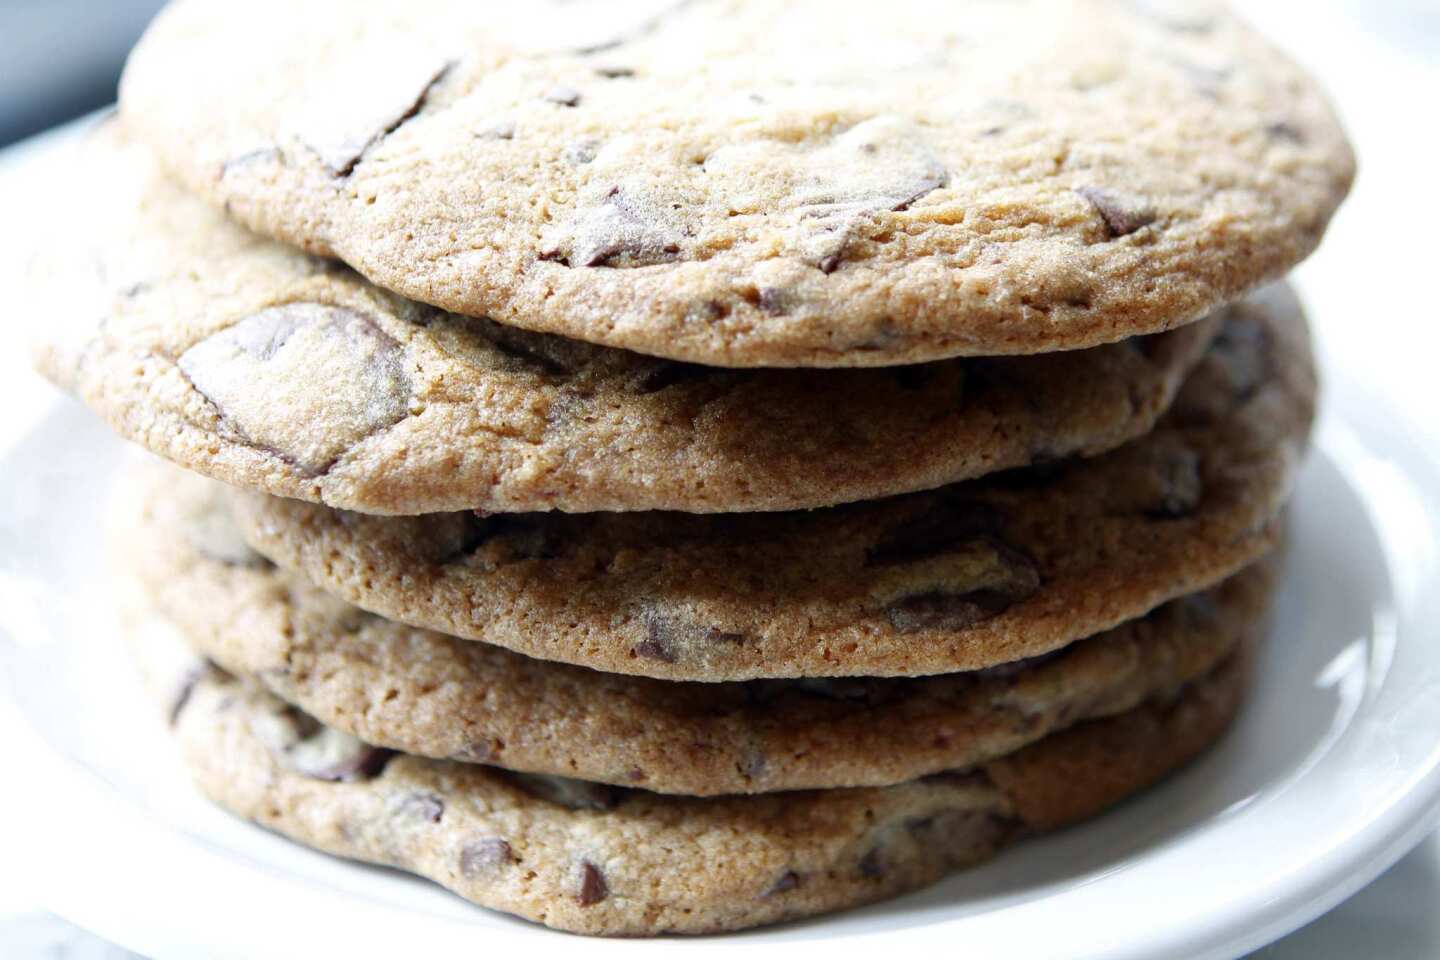 Joan's cookies